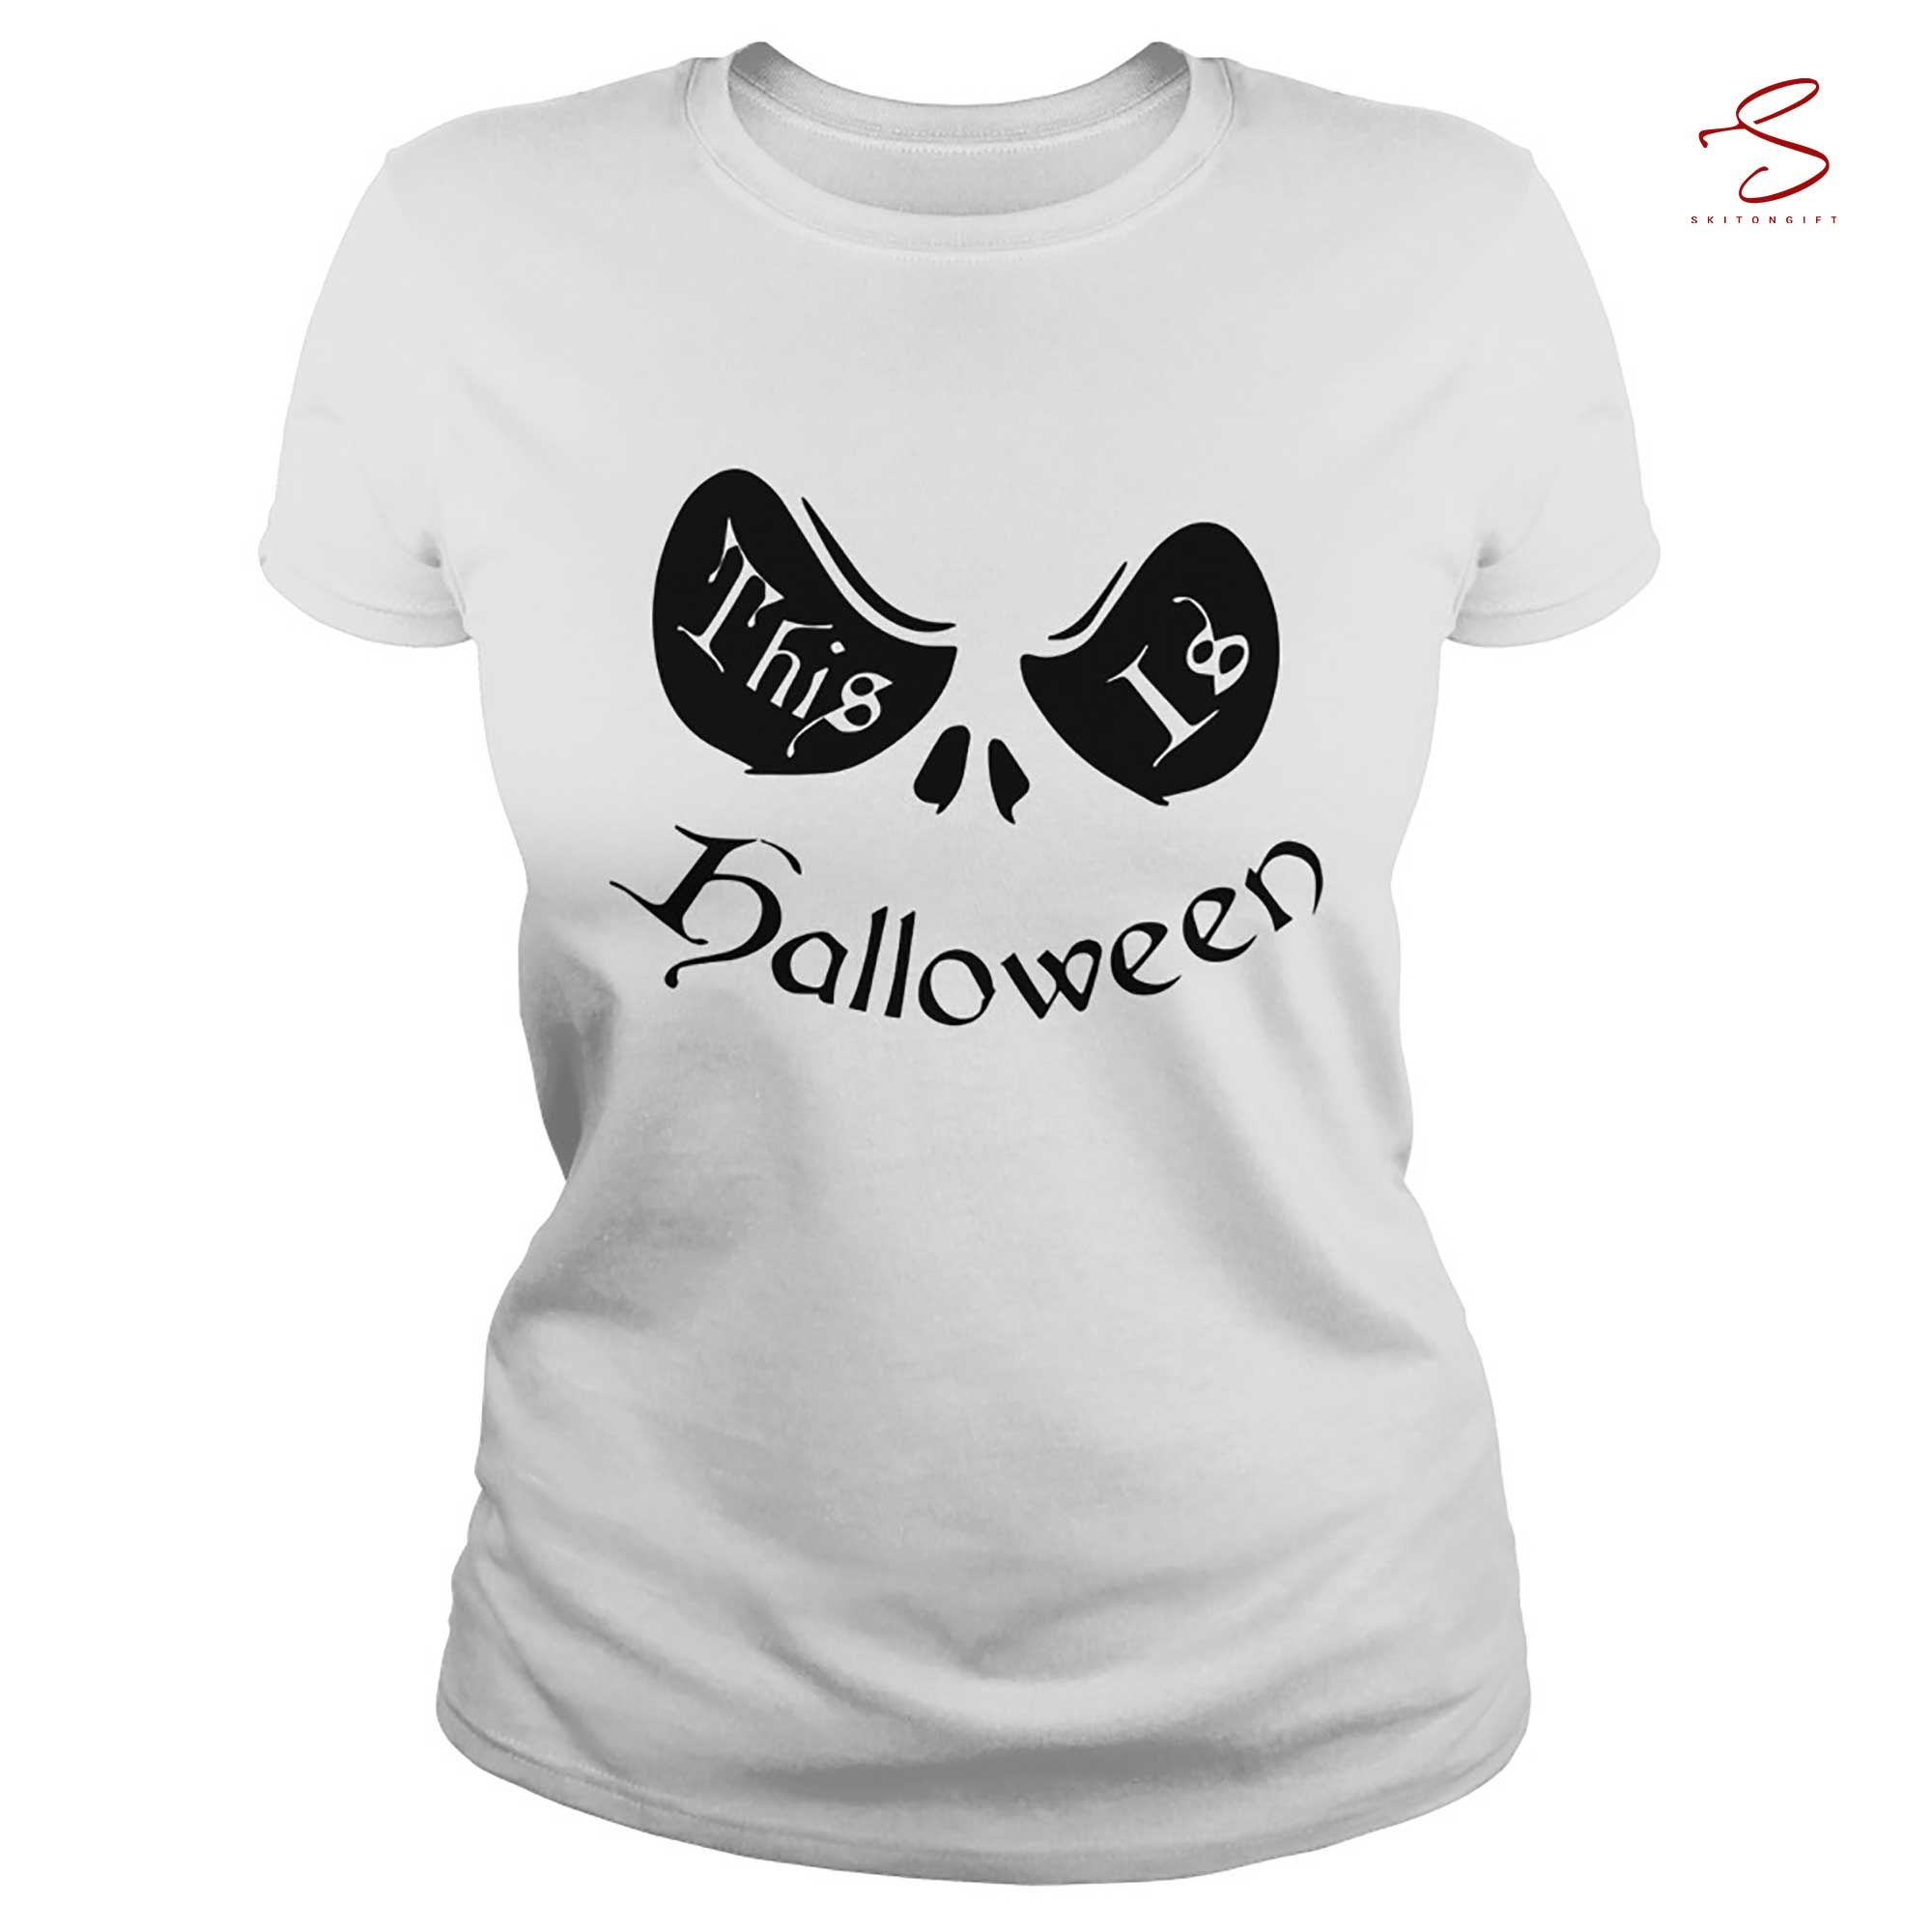 Skitongift This Is Halloween Jack Skellington T Shirt